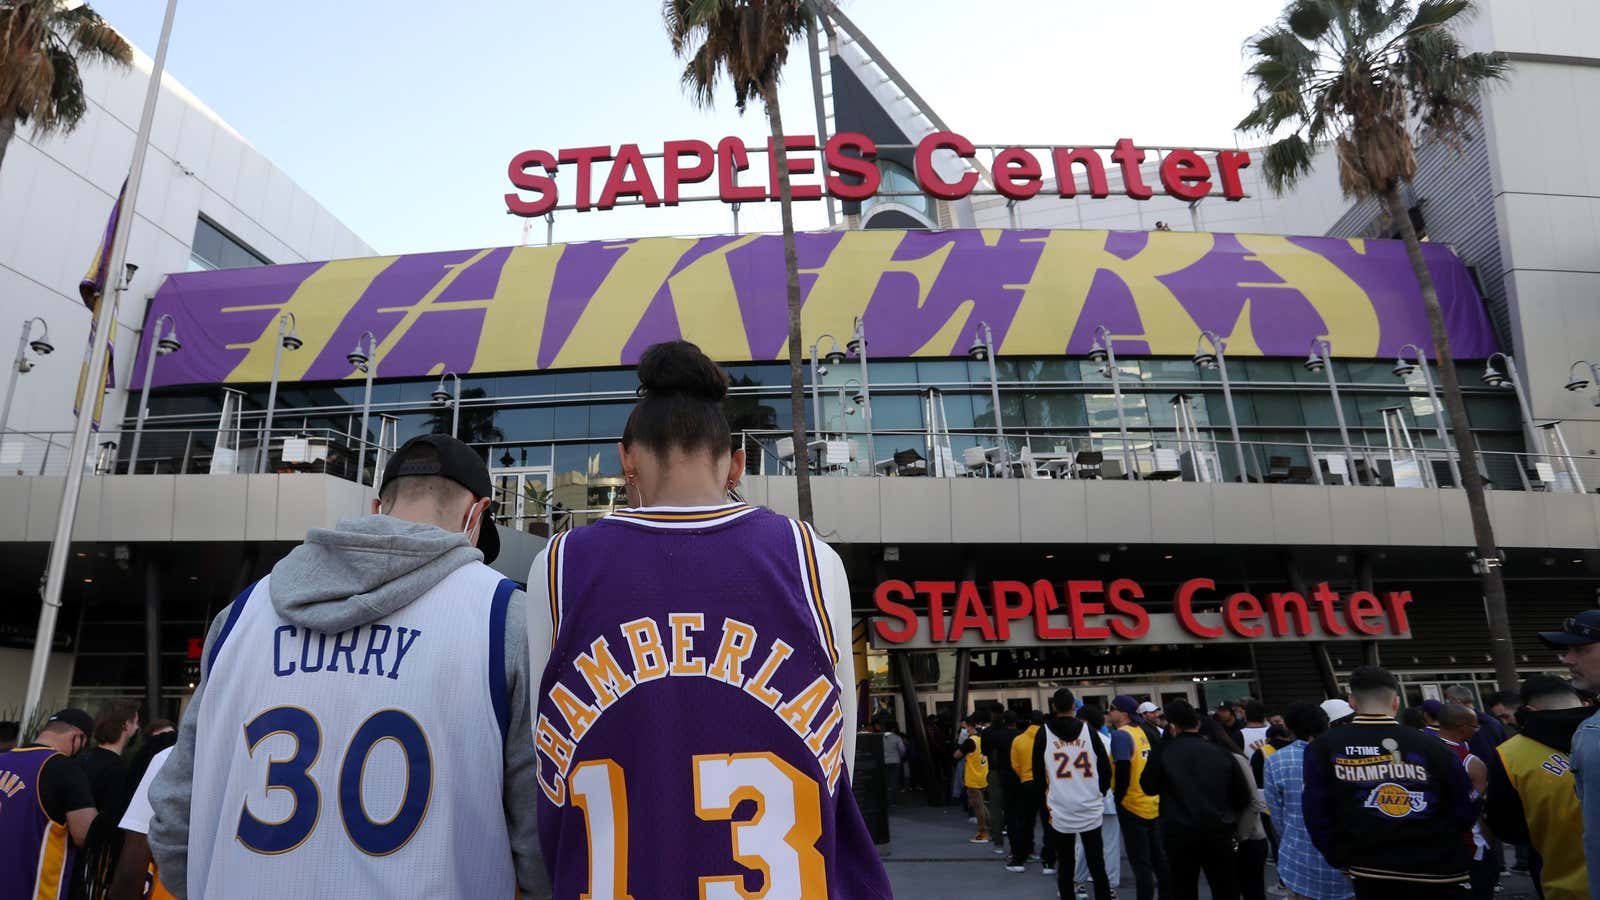 Fans arrive at the Staples Center in LA